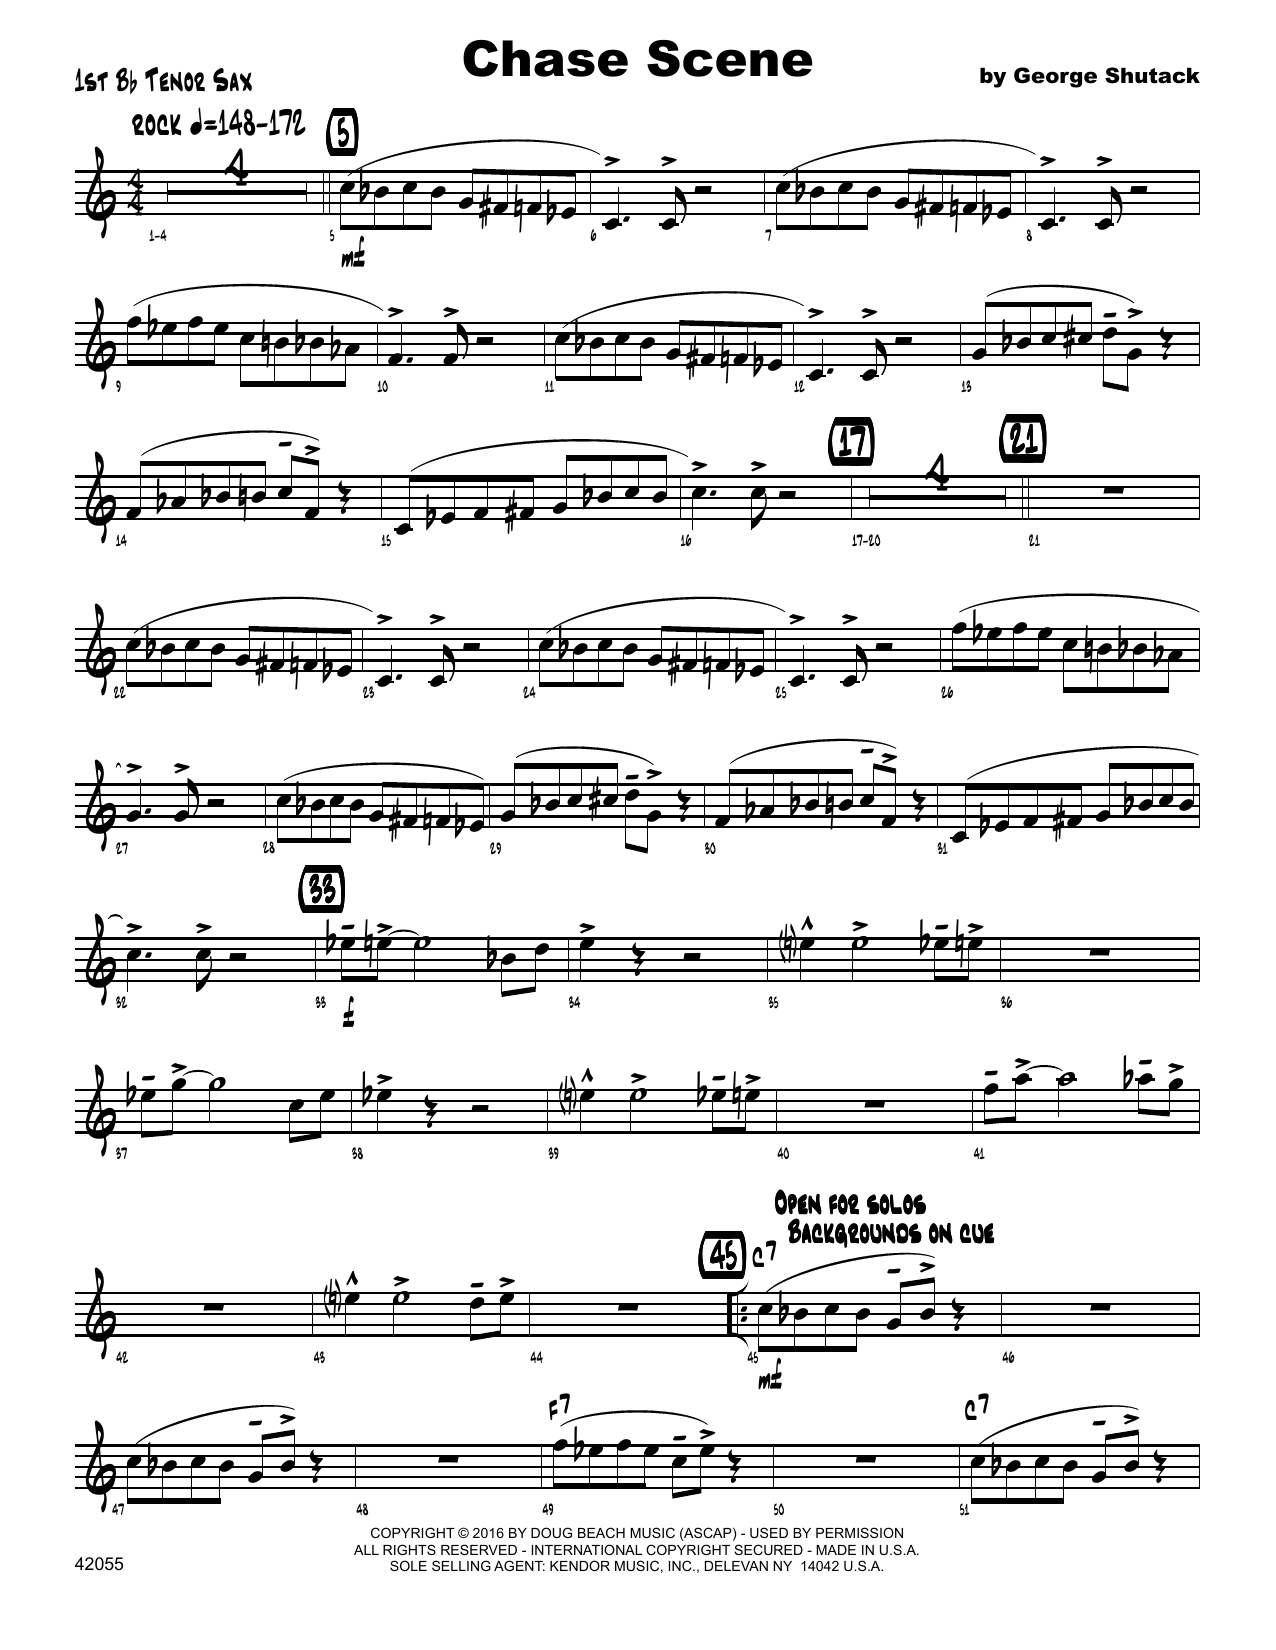 Download George Shutack Chase Scene - 1st Tenor Saxophone Sheet Music